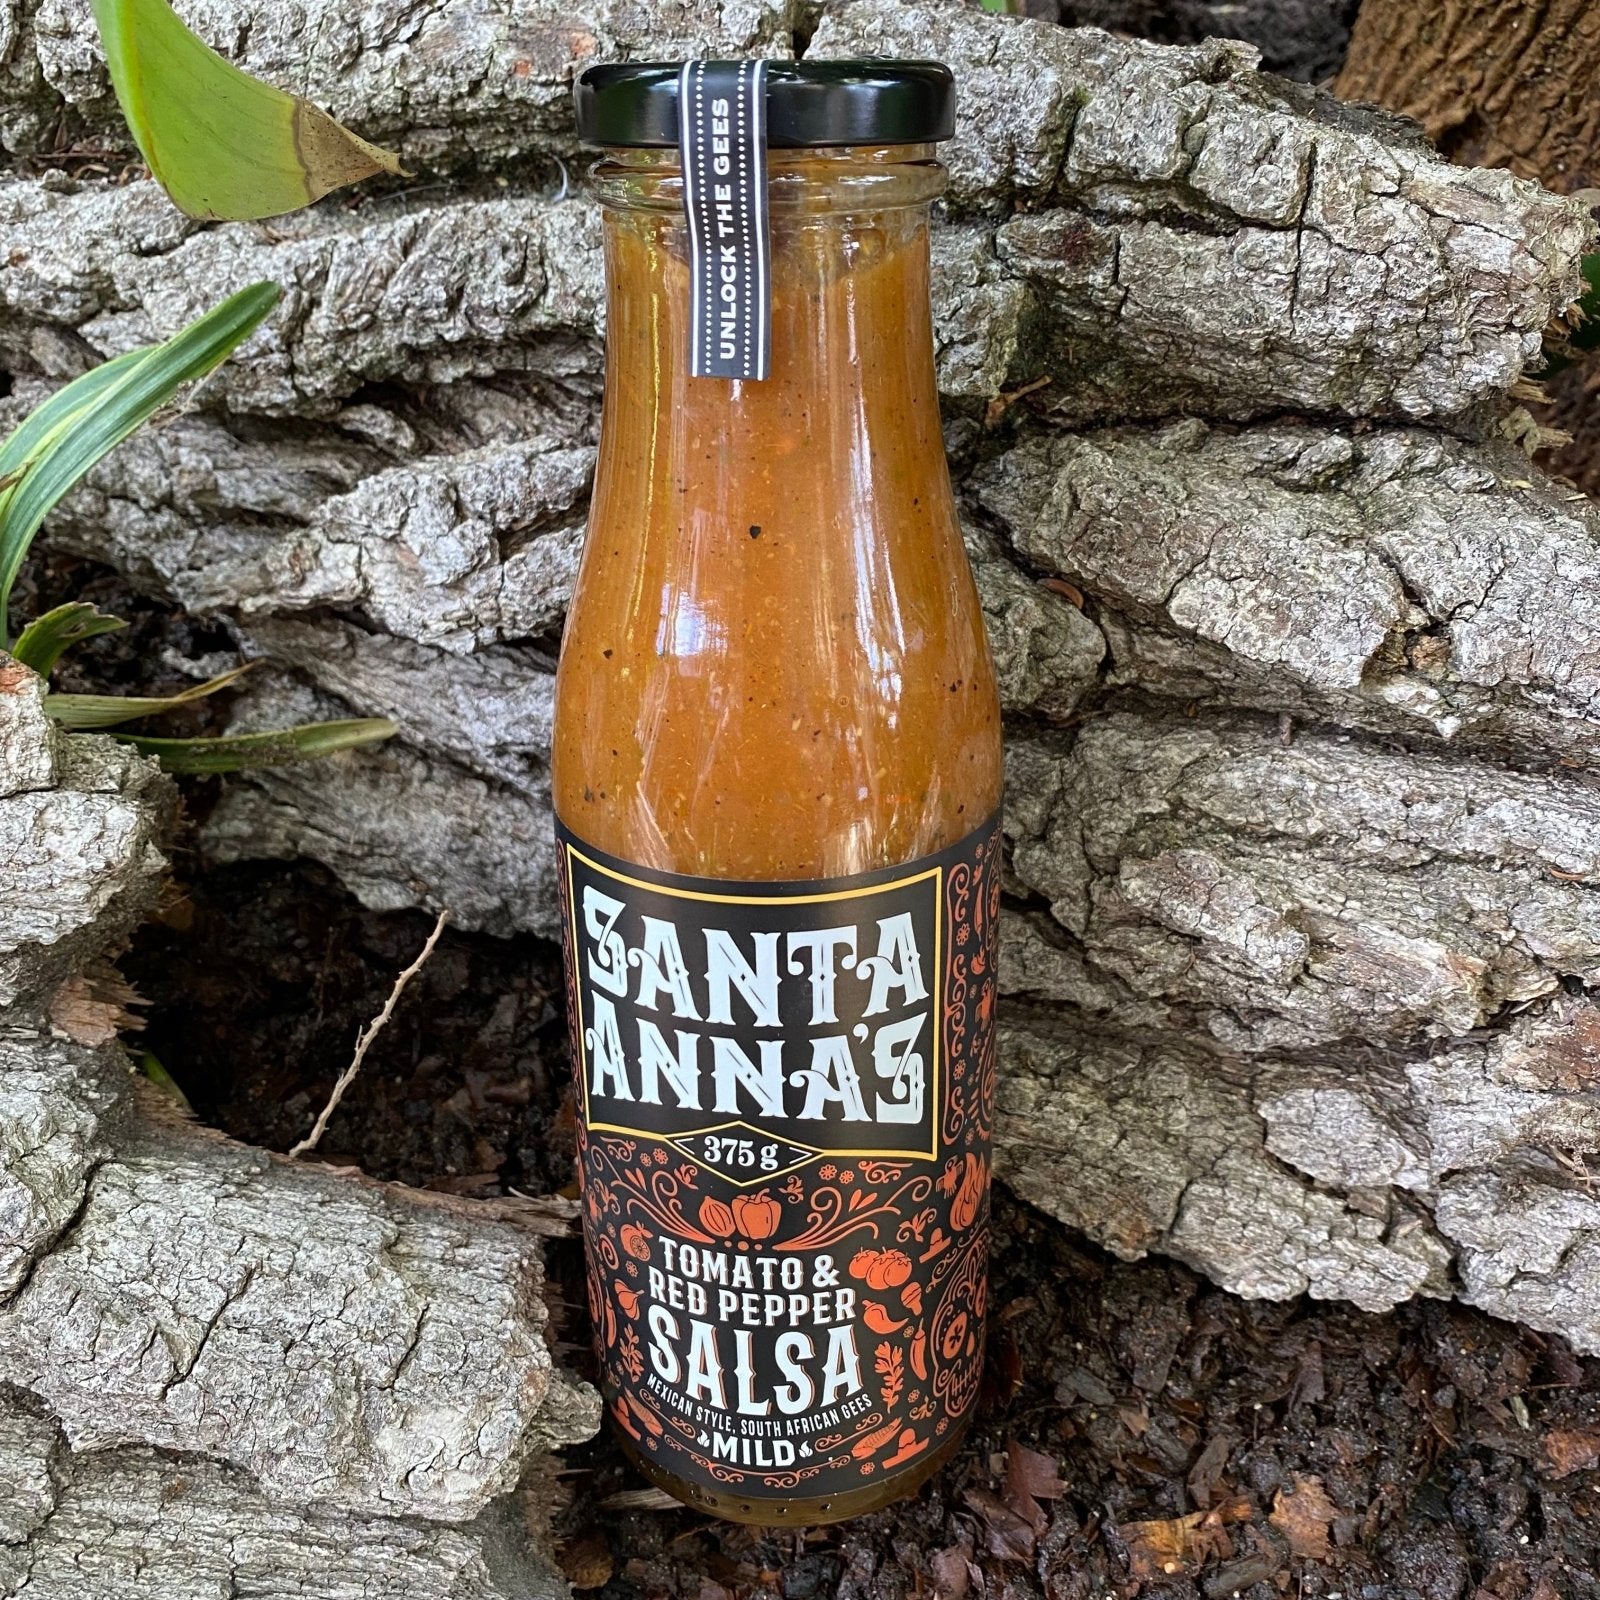 Santa Anna's Tomato & Red Pepper Salsa (375g) - The Deli